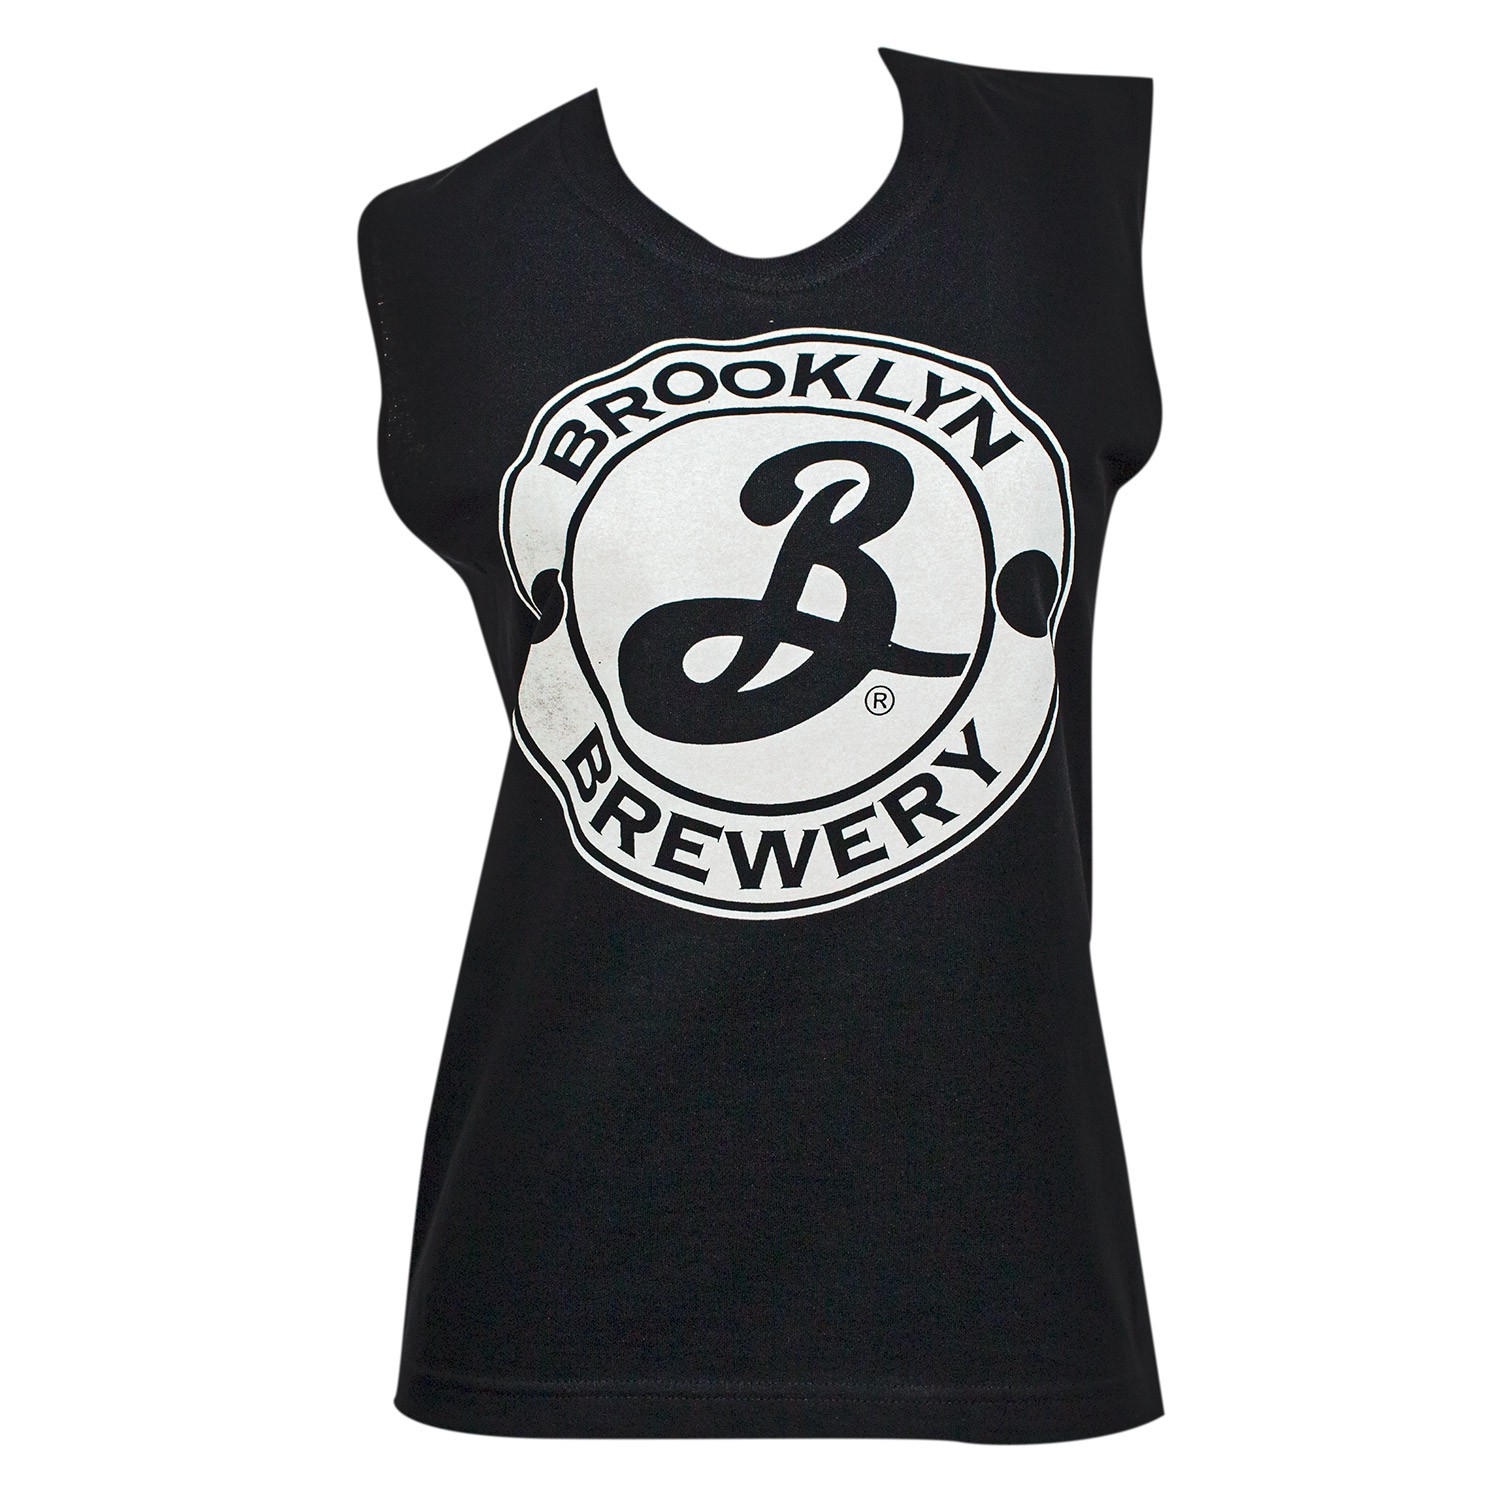 Brooklyn Brewery Women's Black Muscle Tee Shirt